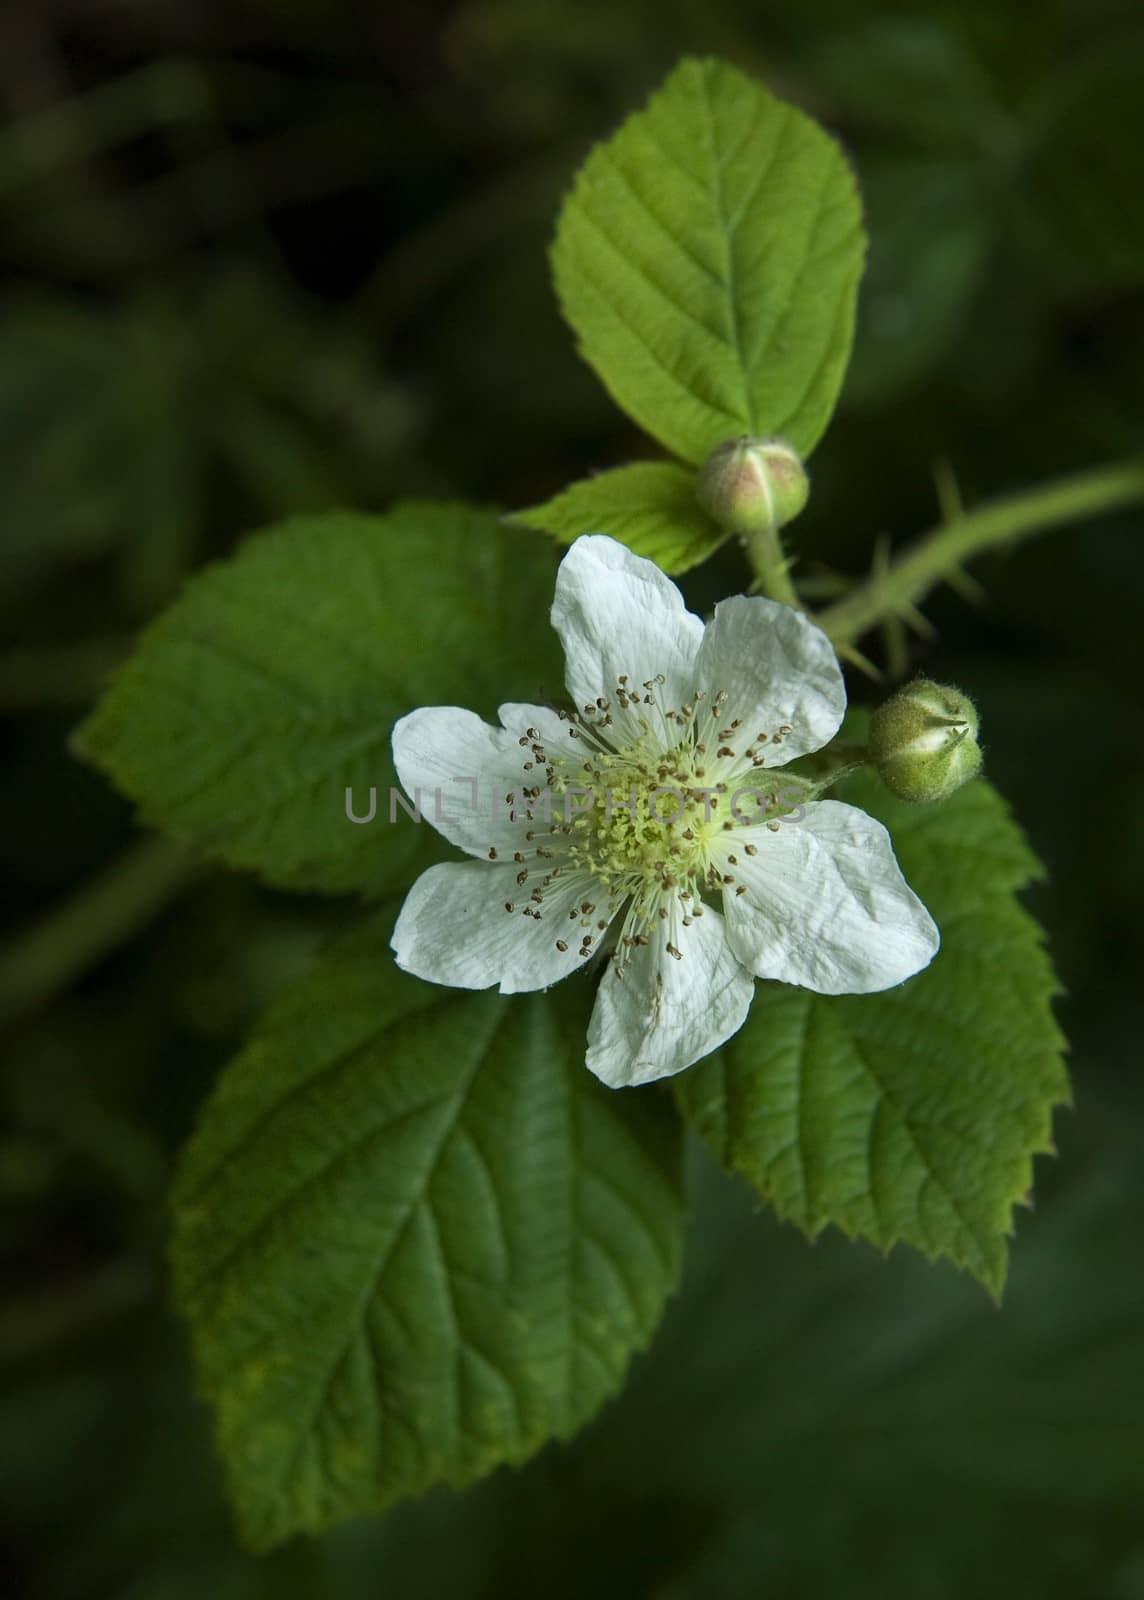 Blackberry, Rubus fruticosus by andrewroland